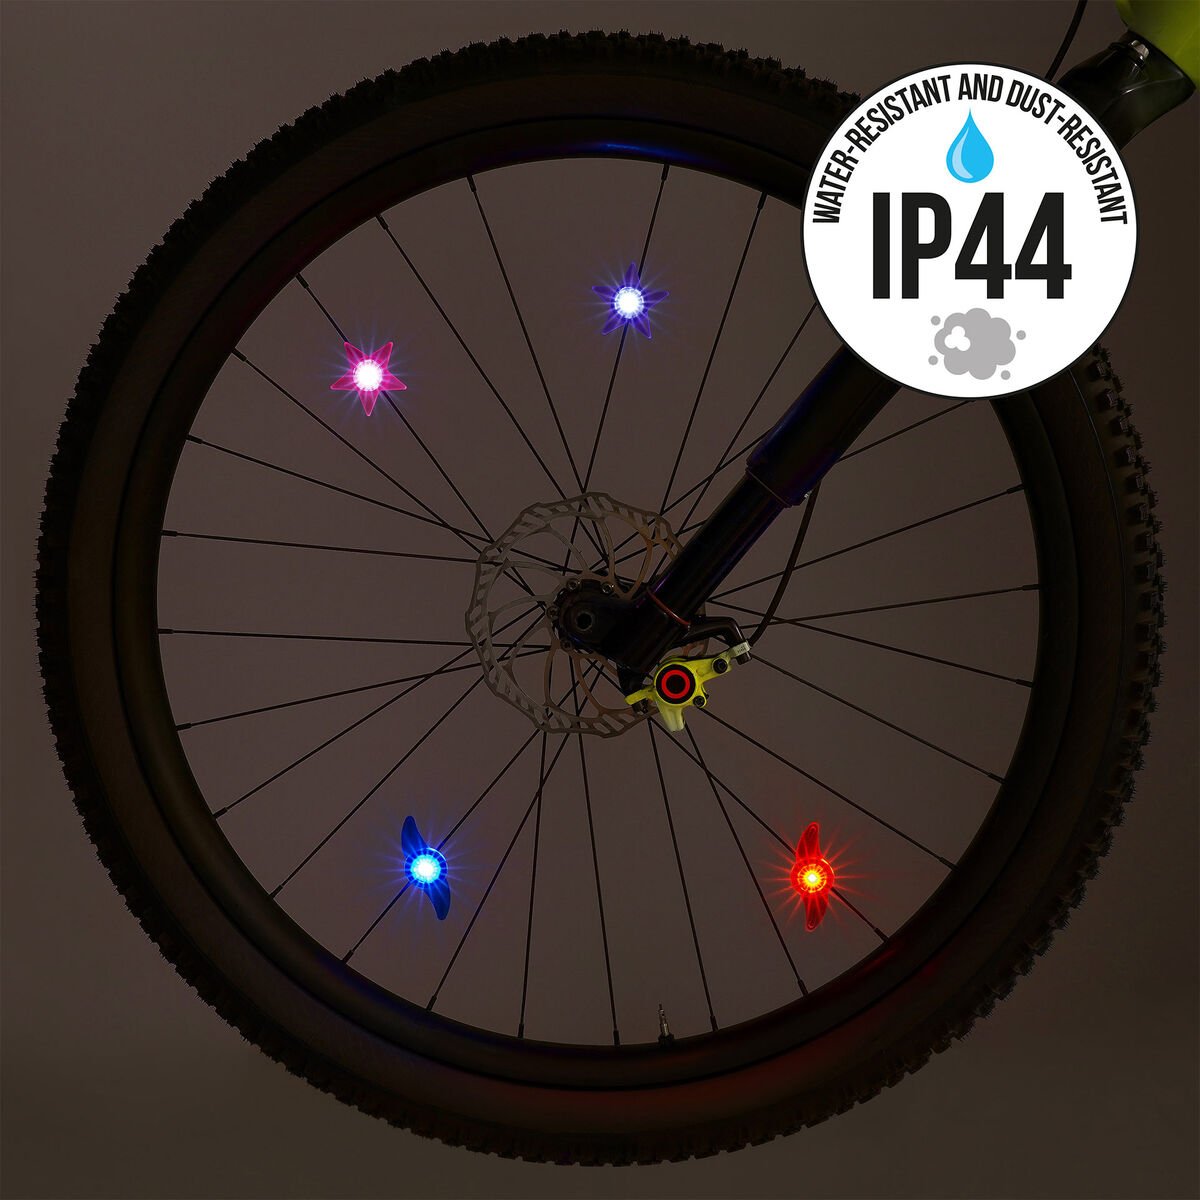 Set of 2 Bicycle Spoke Lights - Ride & Shine, , zoo